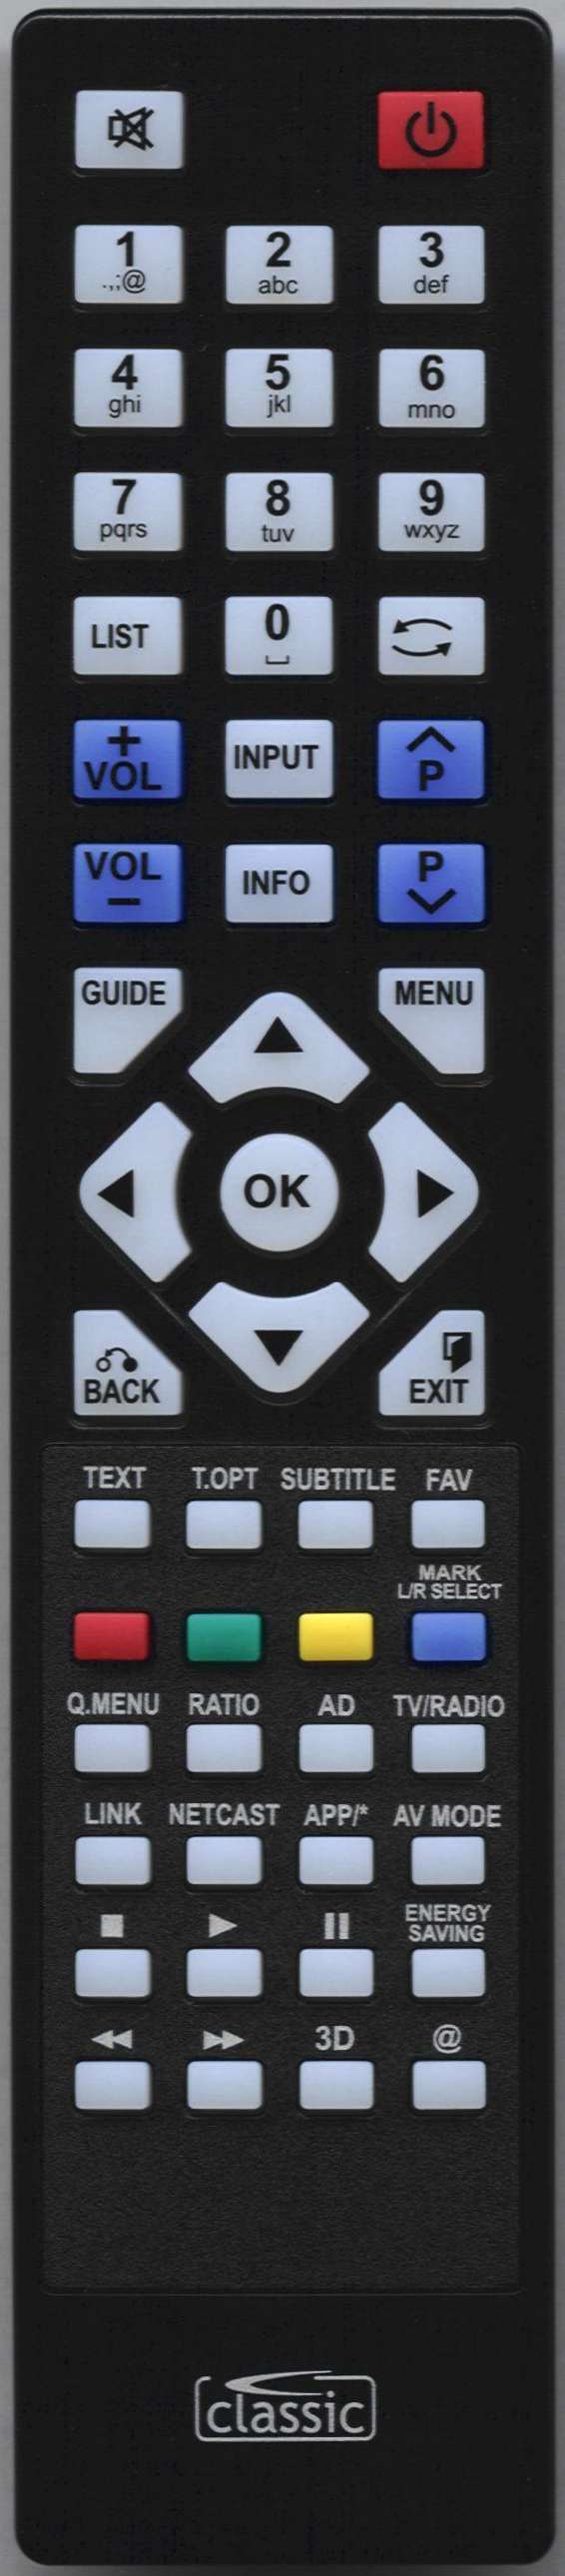 LG 19LD350 Remote Control Alternative